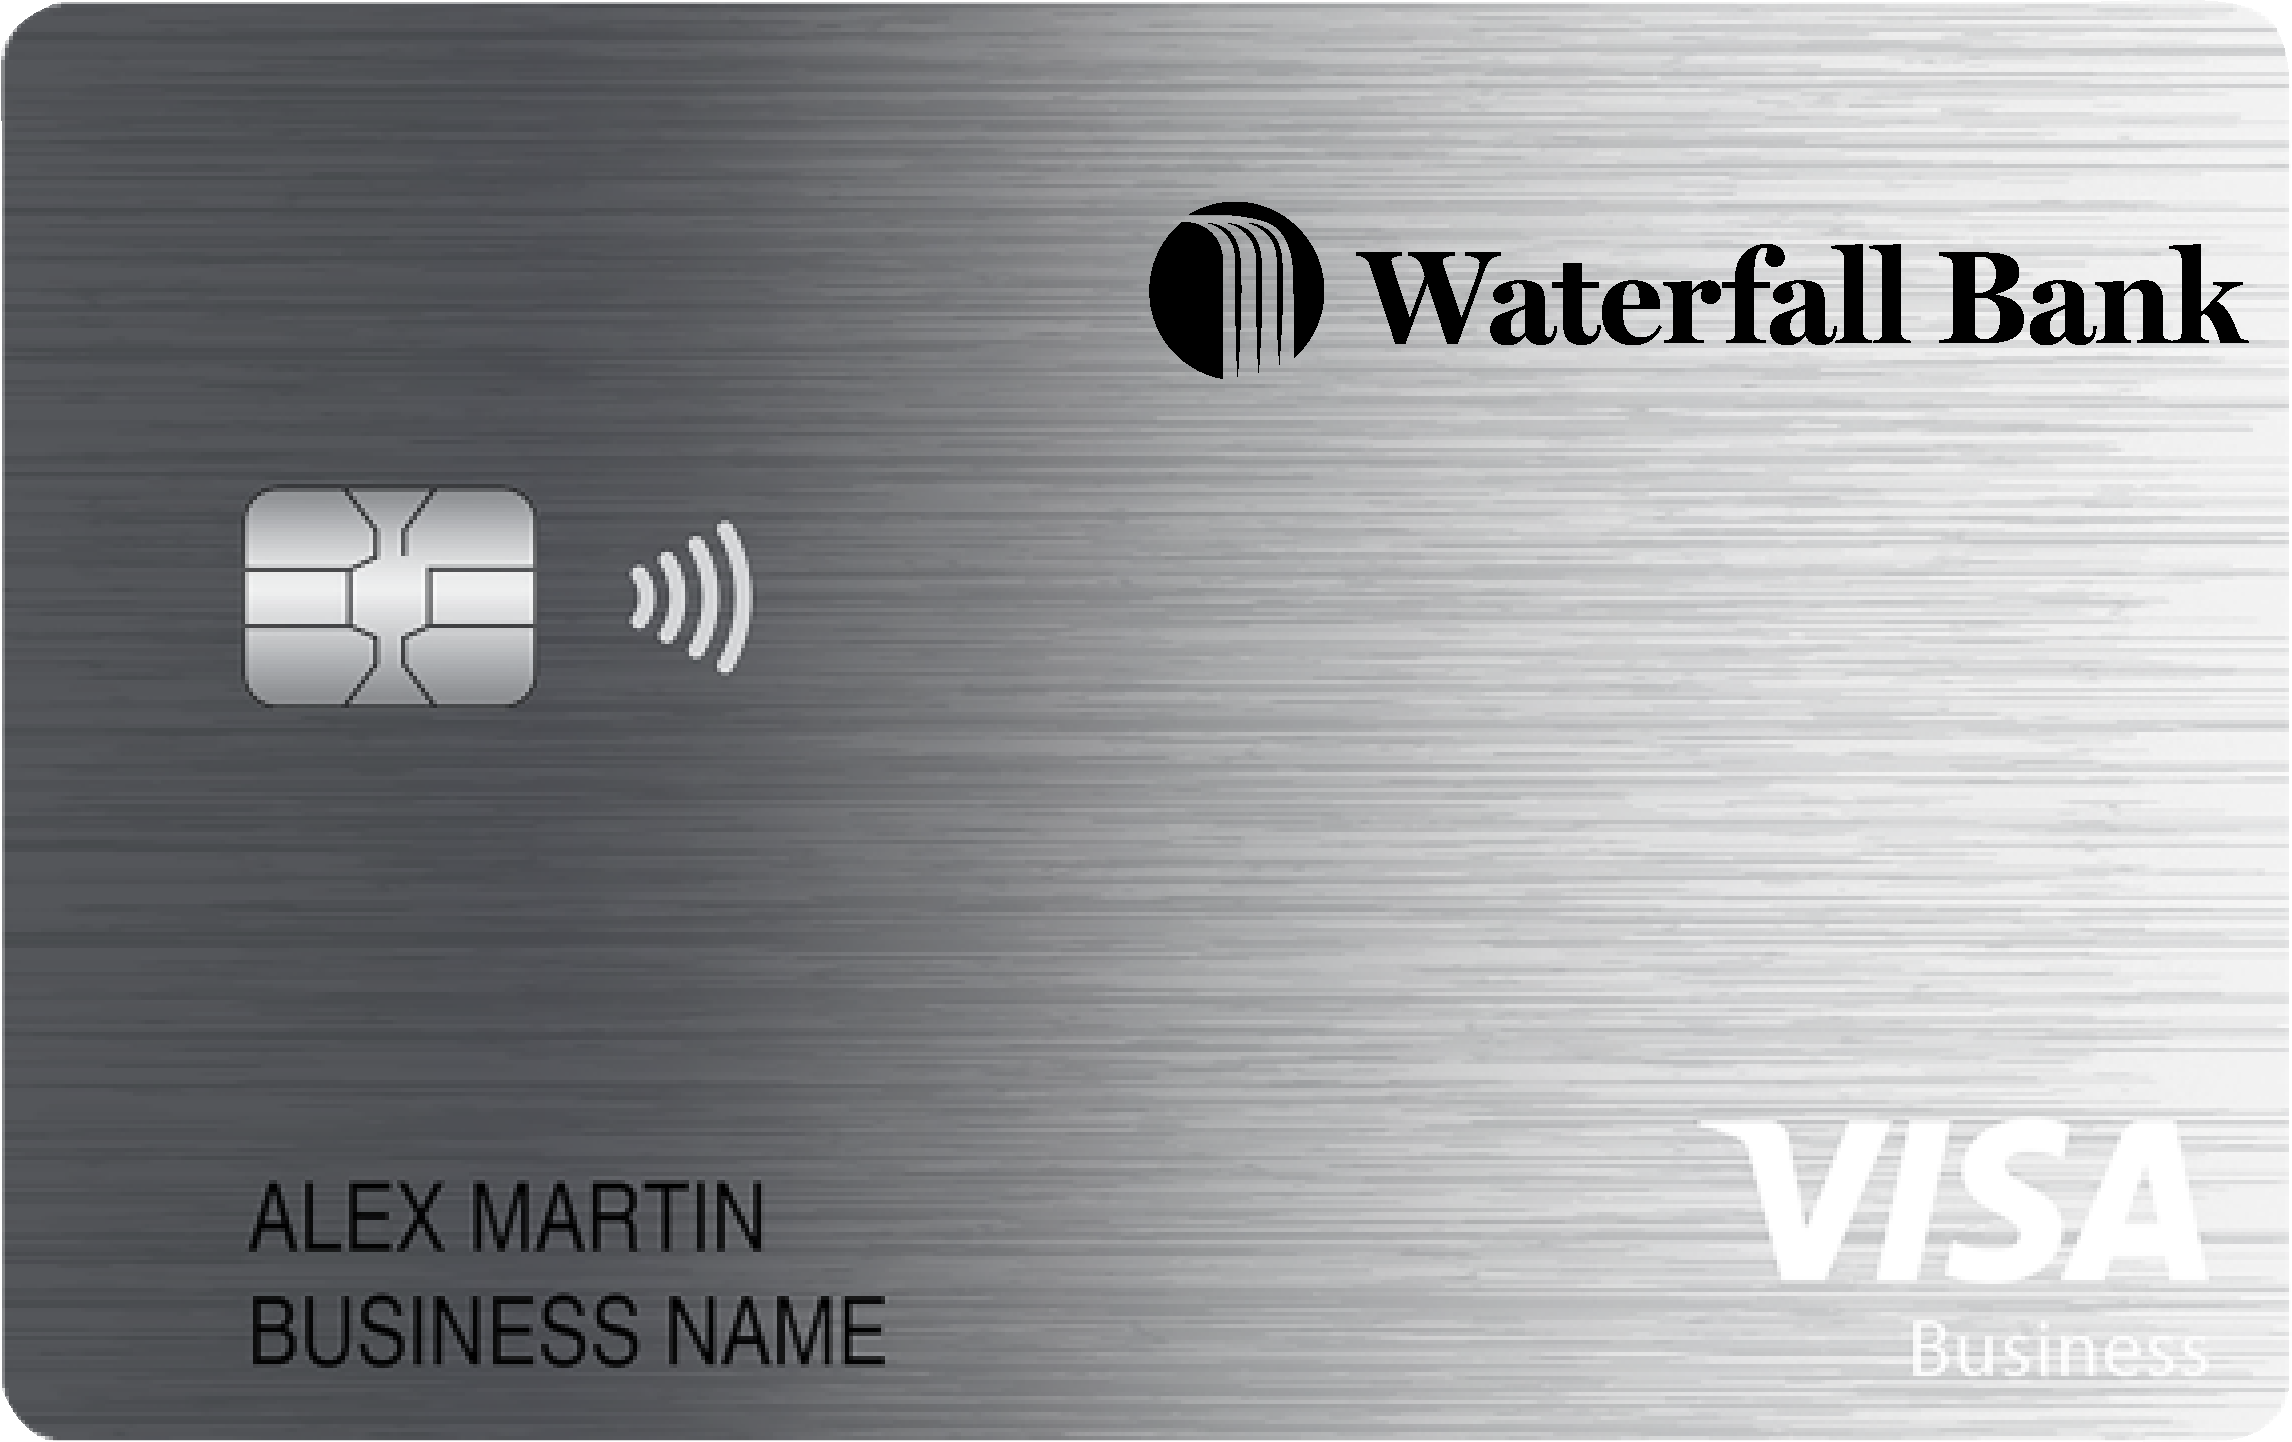 Waterfall Bank Business Cash Preferred Card